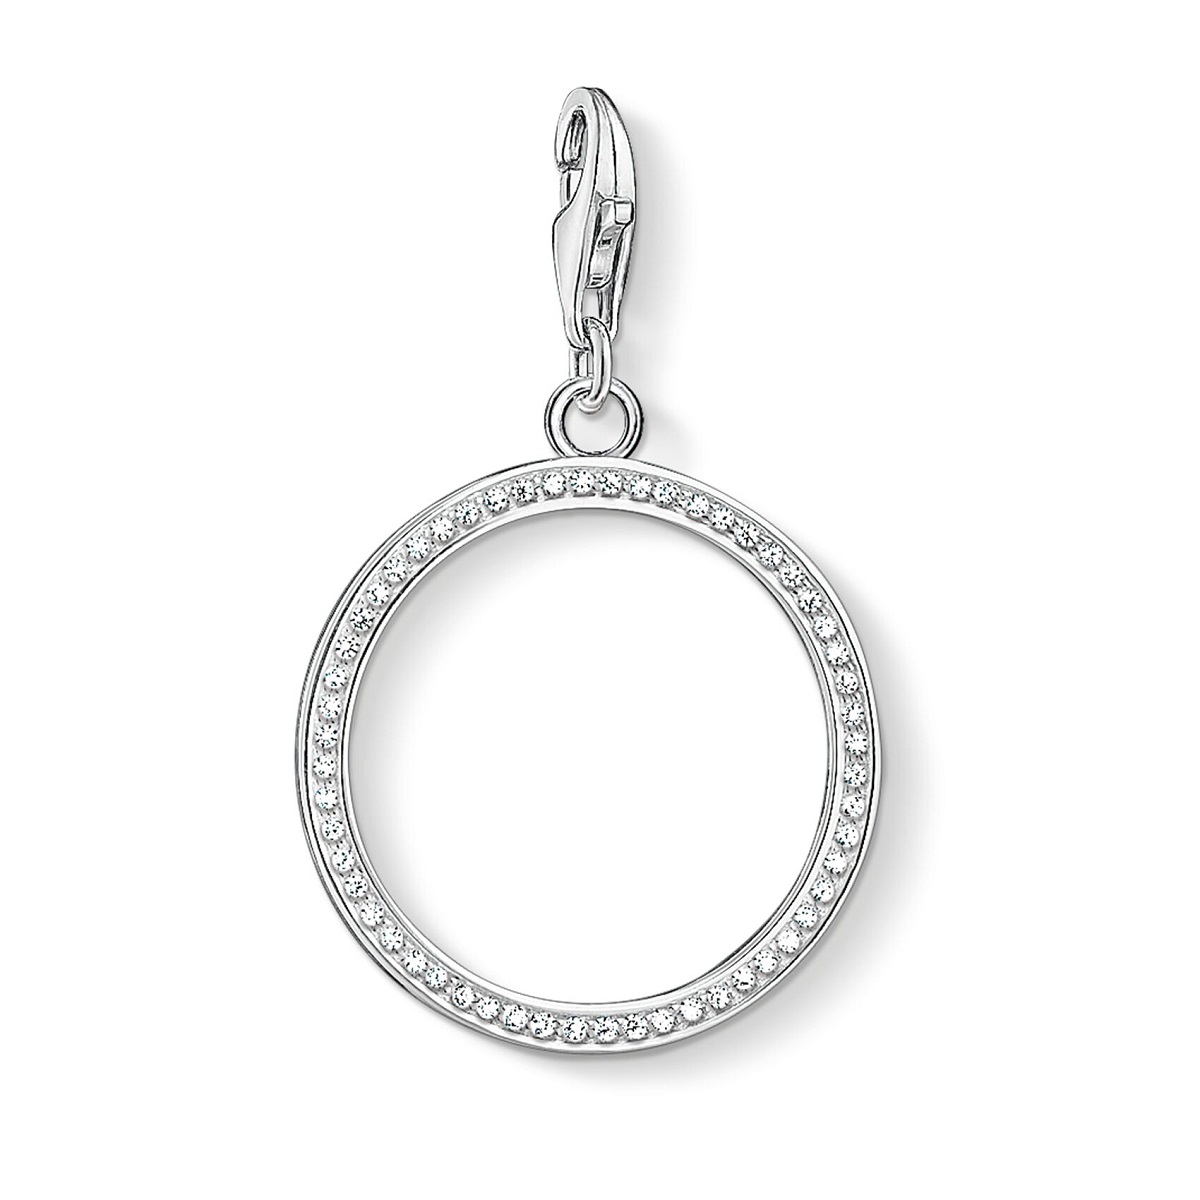 Thomas Sabo Charm Pendant - Silver and Zircona Open Circle 1530-051-14